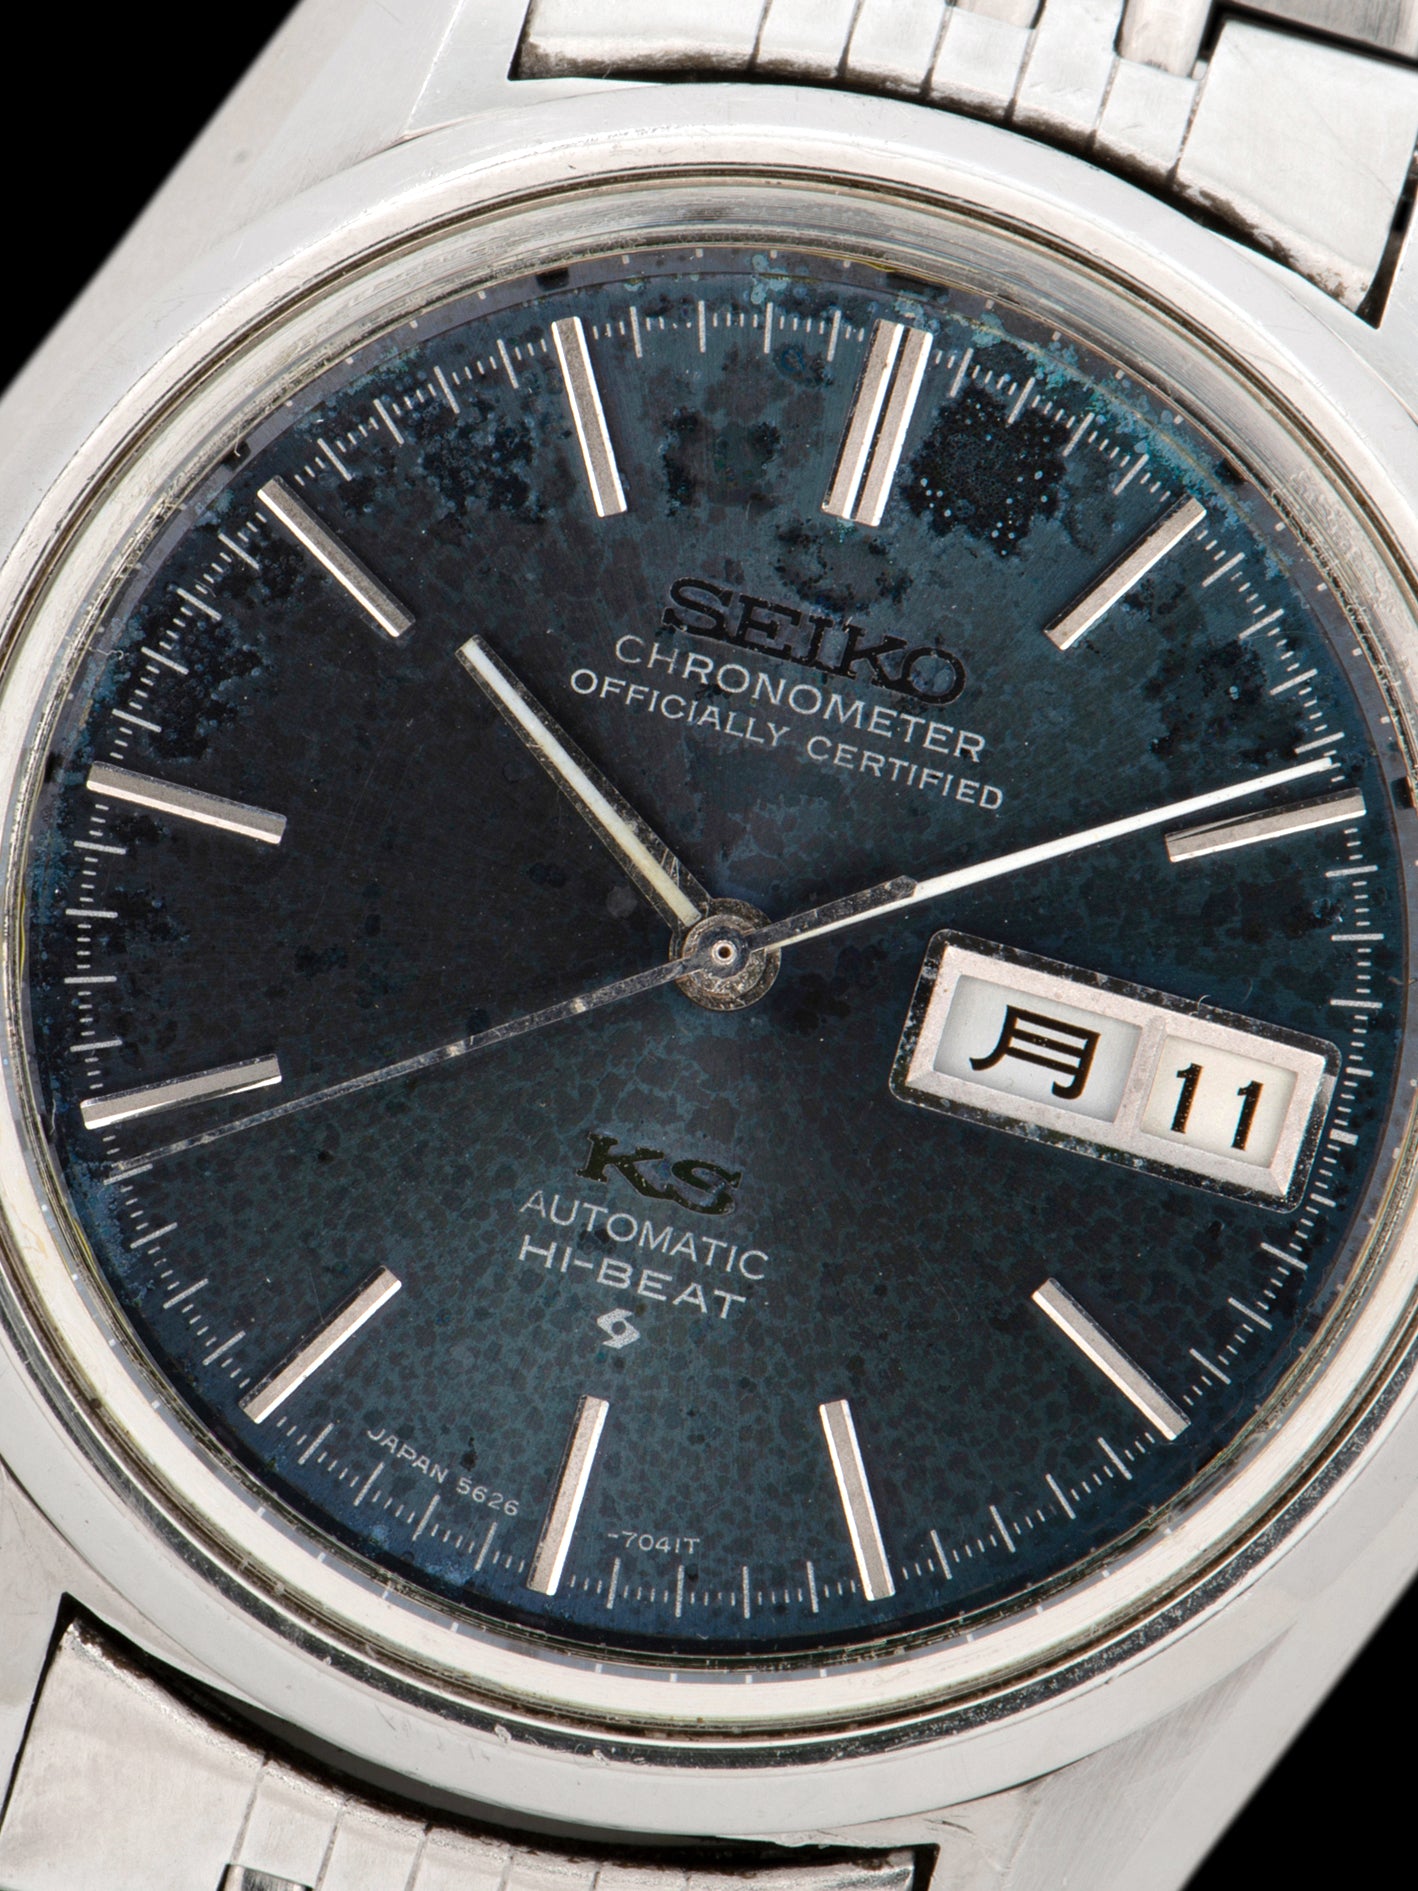 1971 King Seiko HI-Beat Chronometer (Ref. 5626-7040) Blue Dial